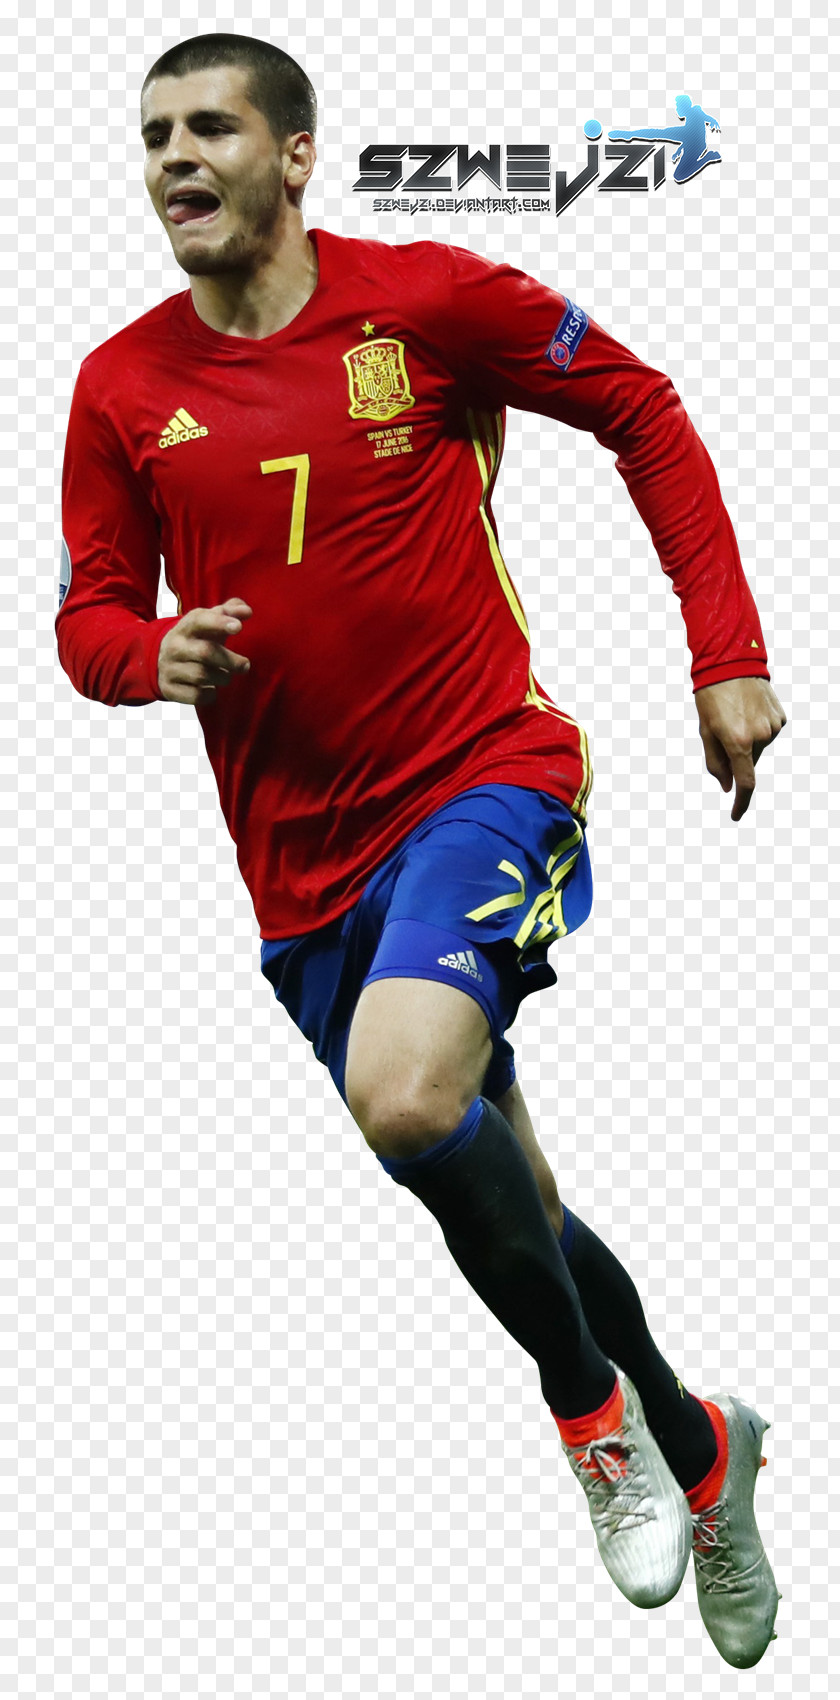 Football Yannick Ferreira Carrasco Soccer Player Ixelles Atlético Madrid Spain National Team PNG